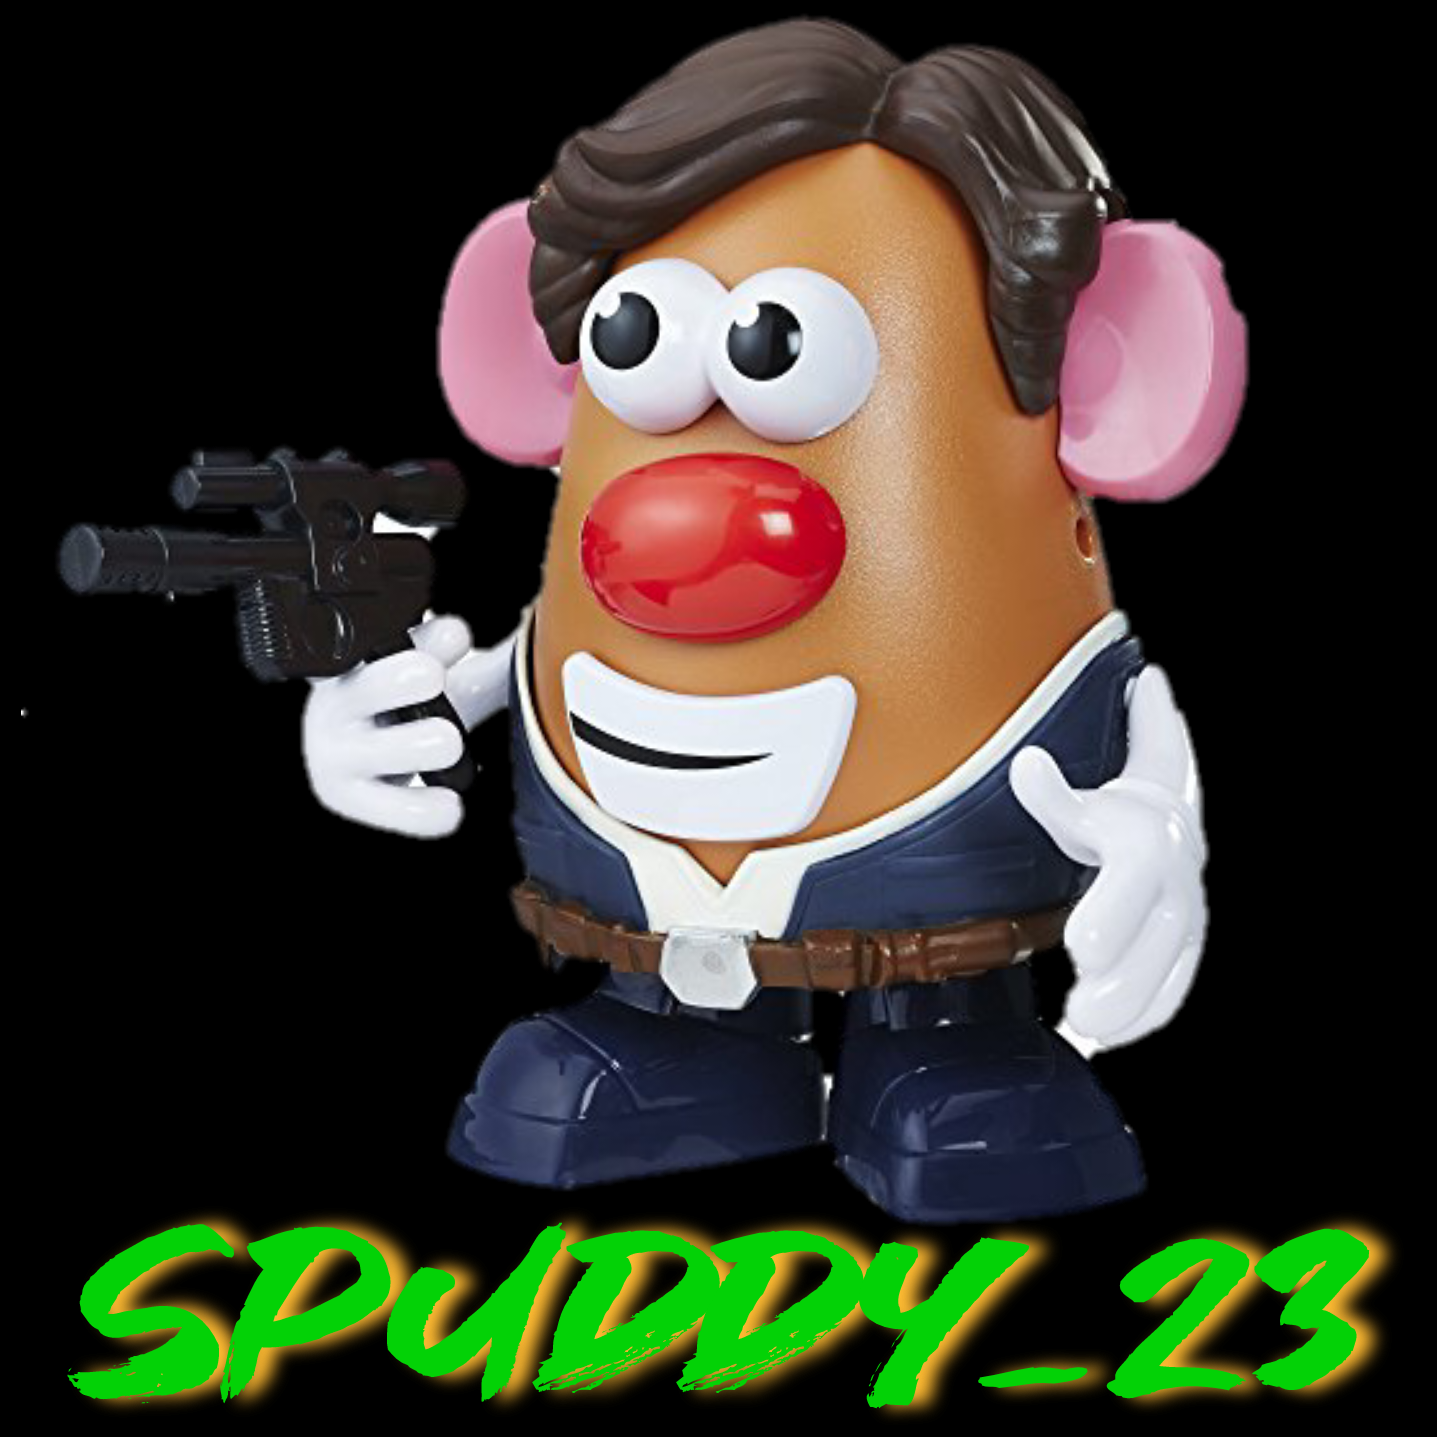 spuddy23